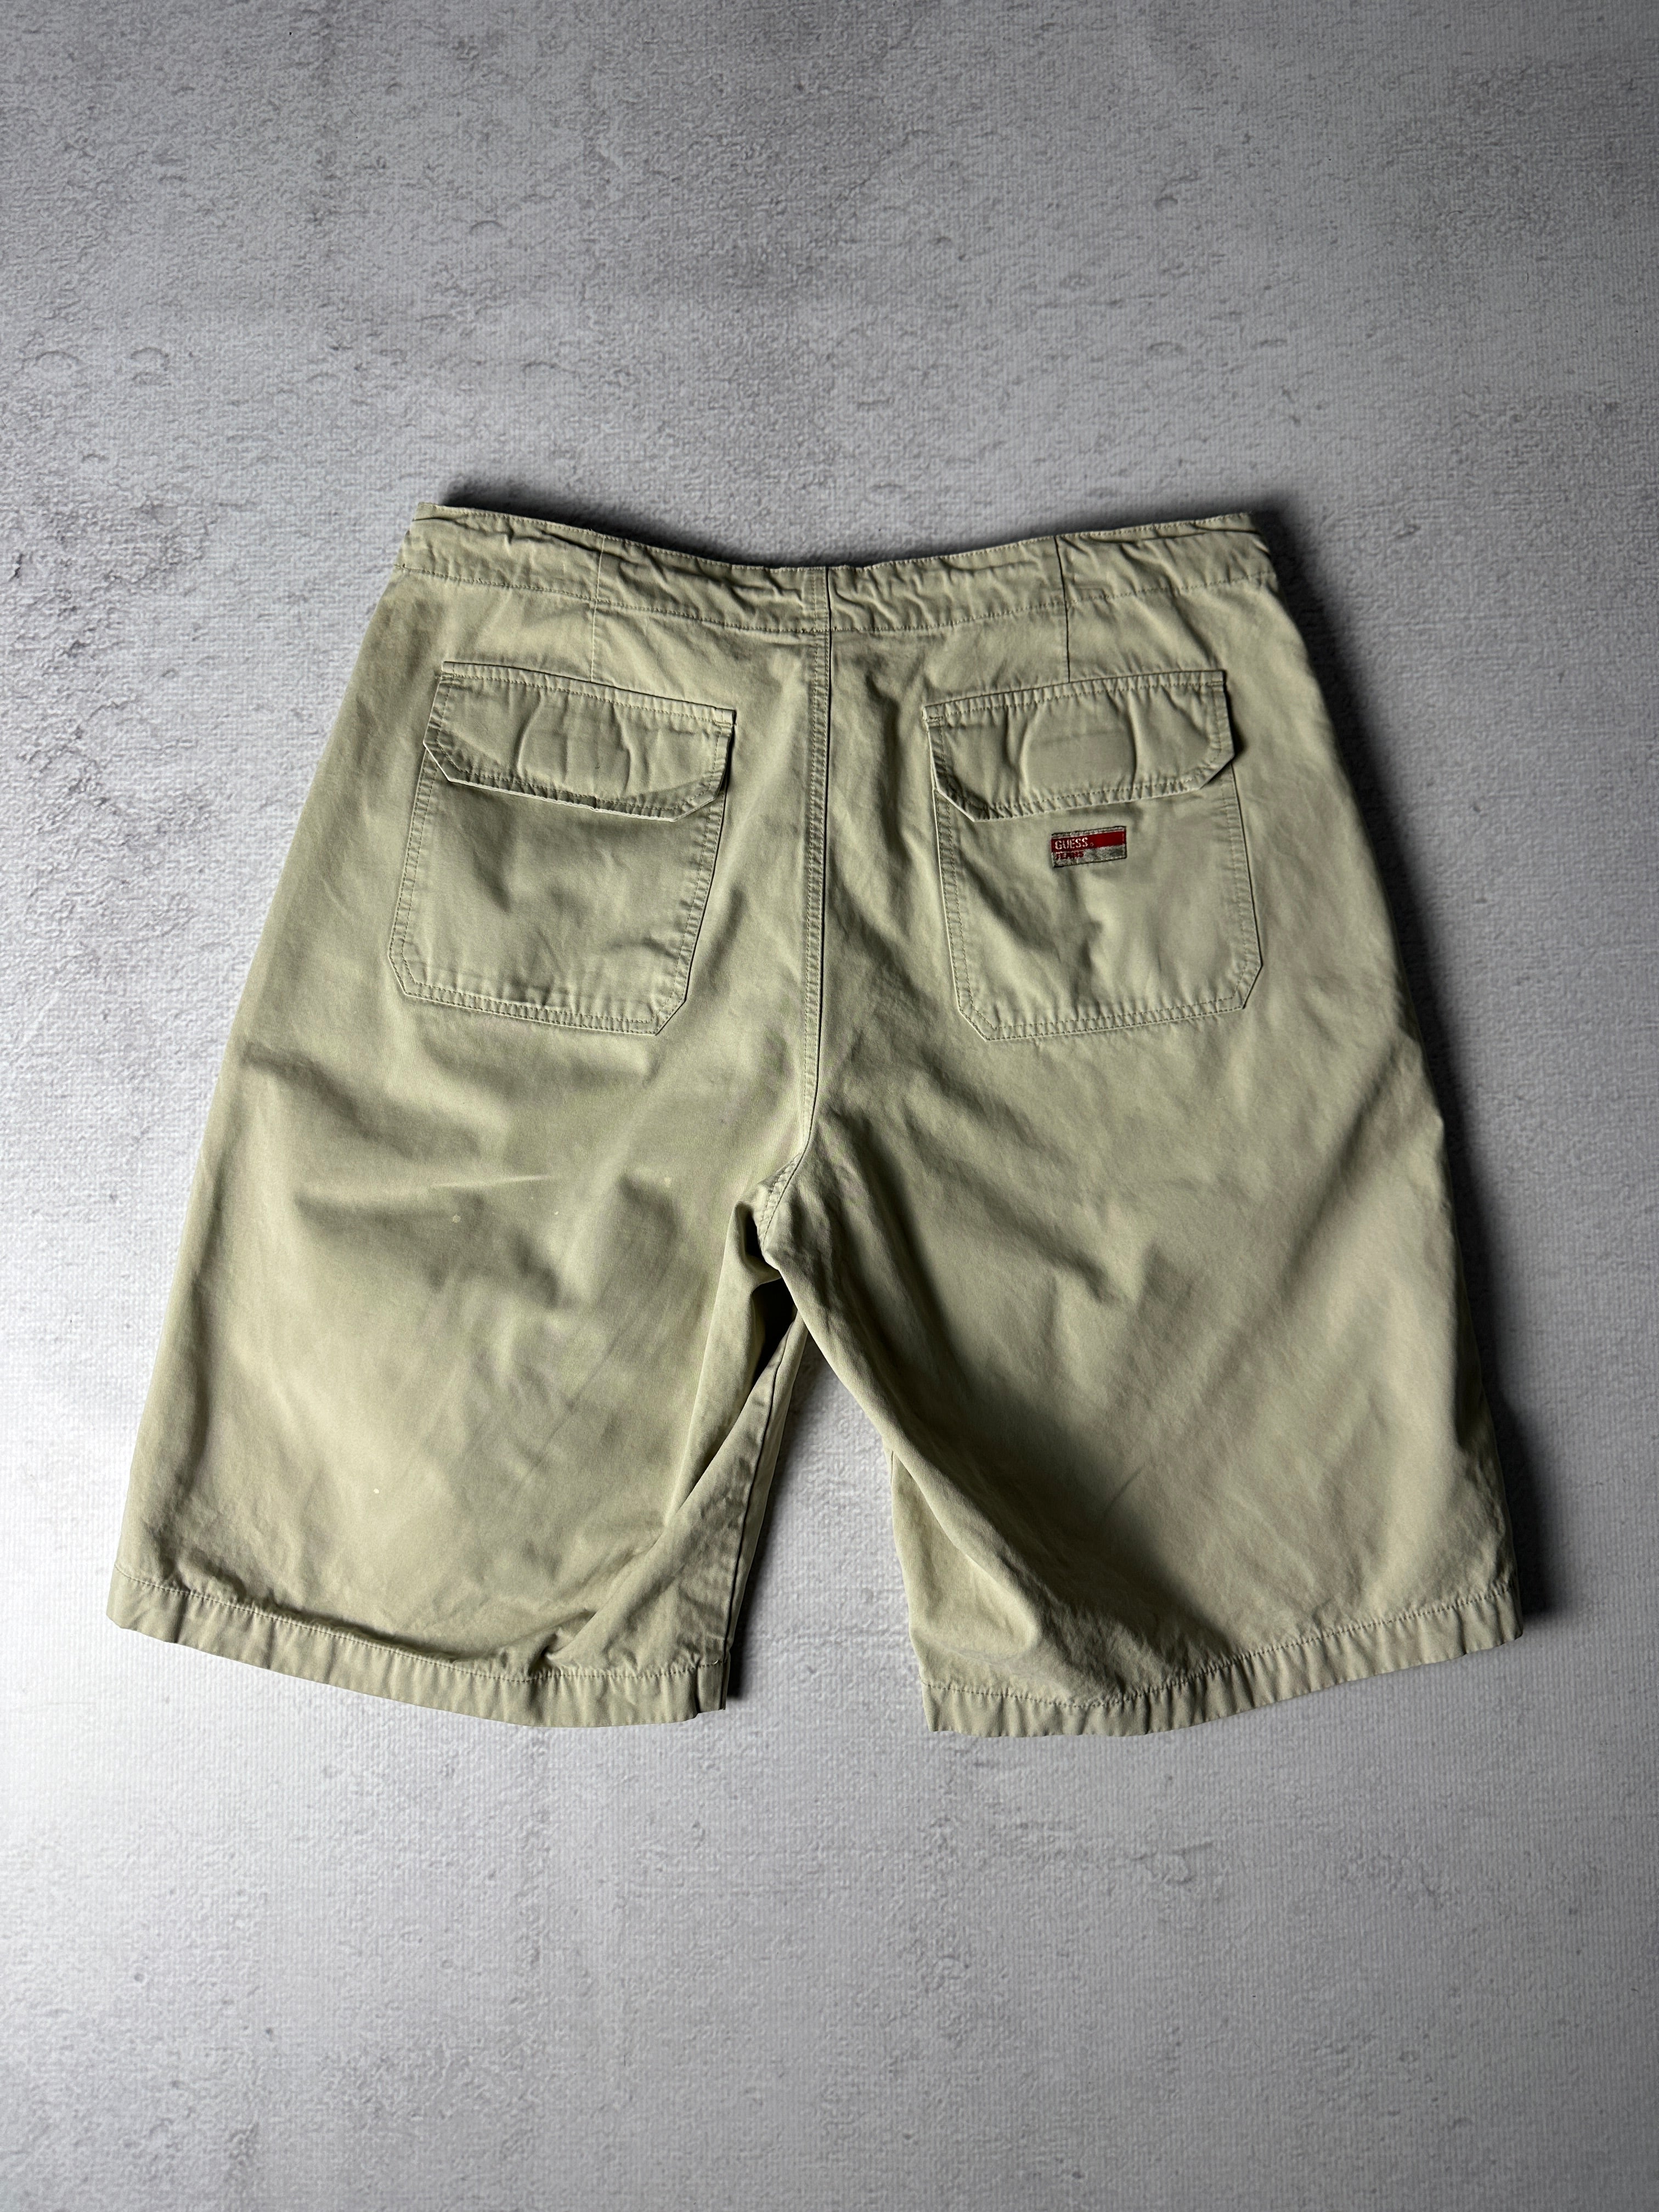 Vintage Guess Chino Shorts - Men's 36W12